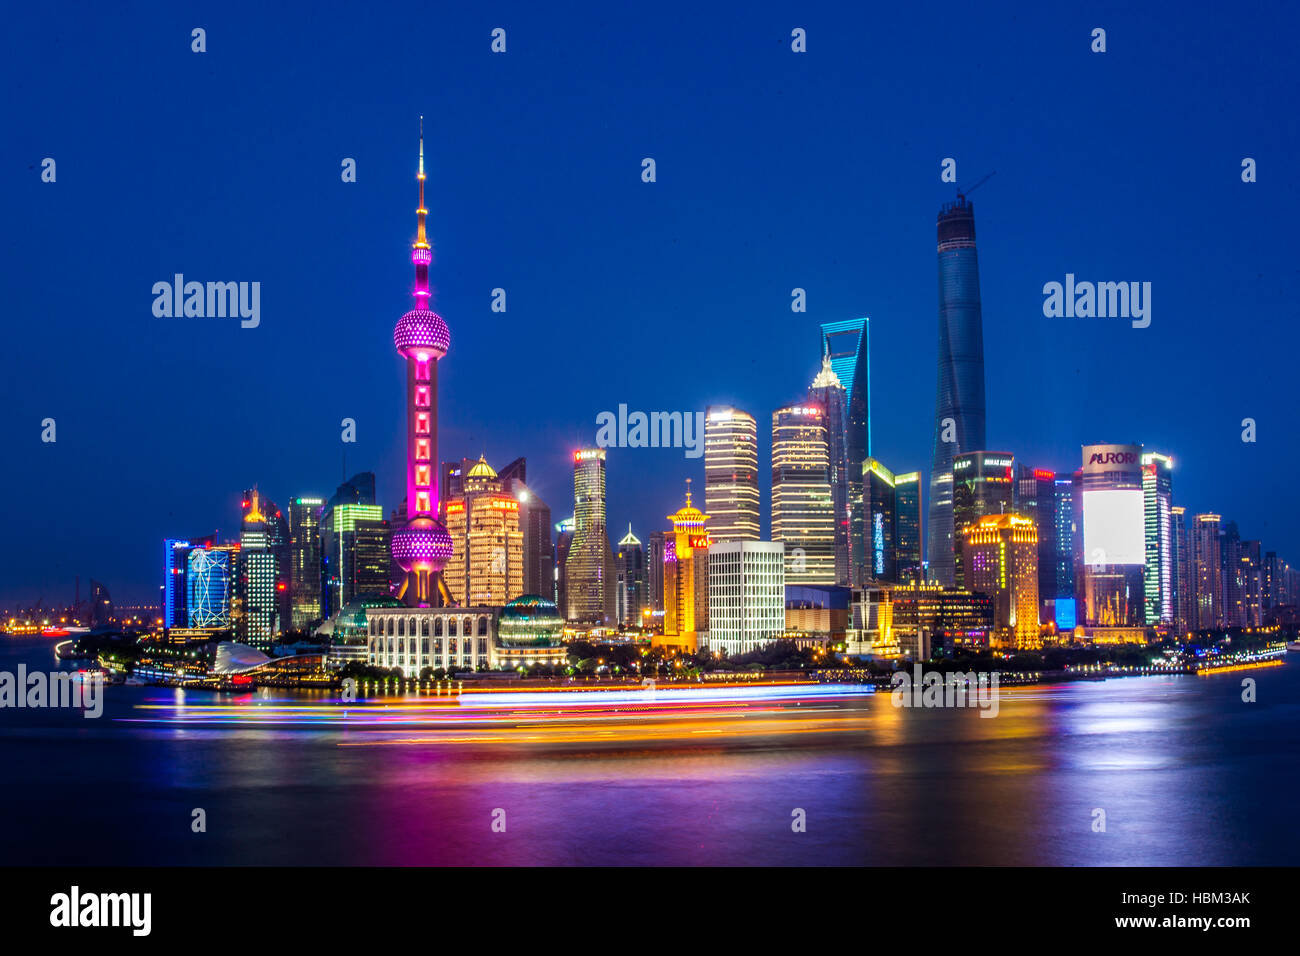 Shanghai Stock Photo